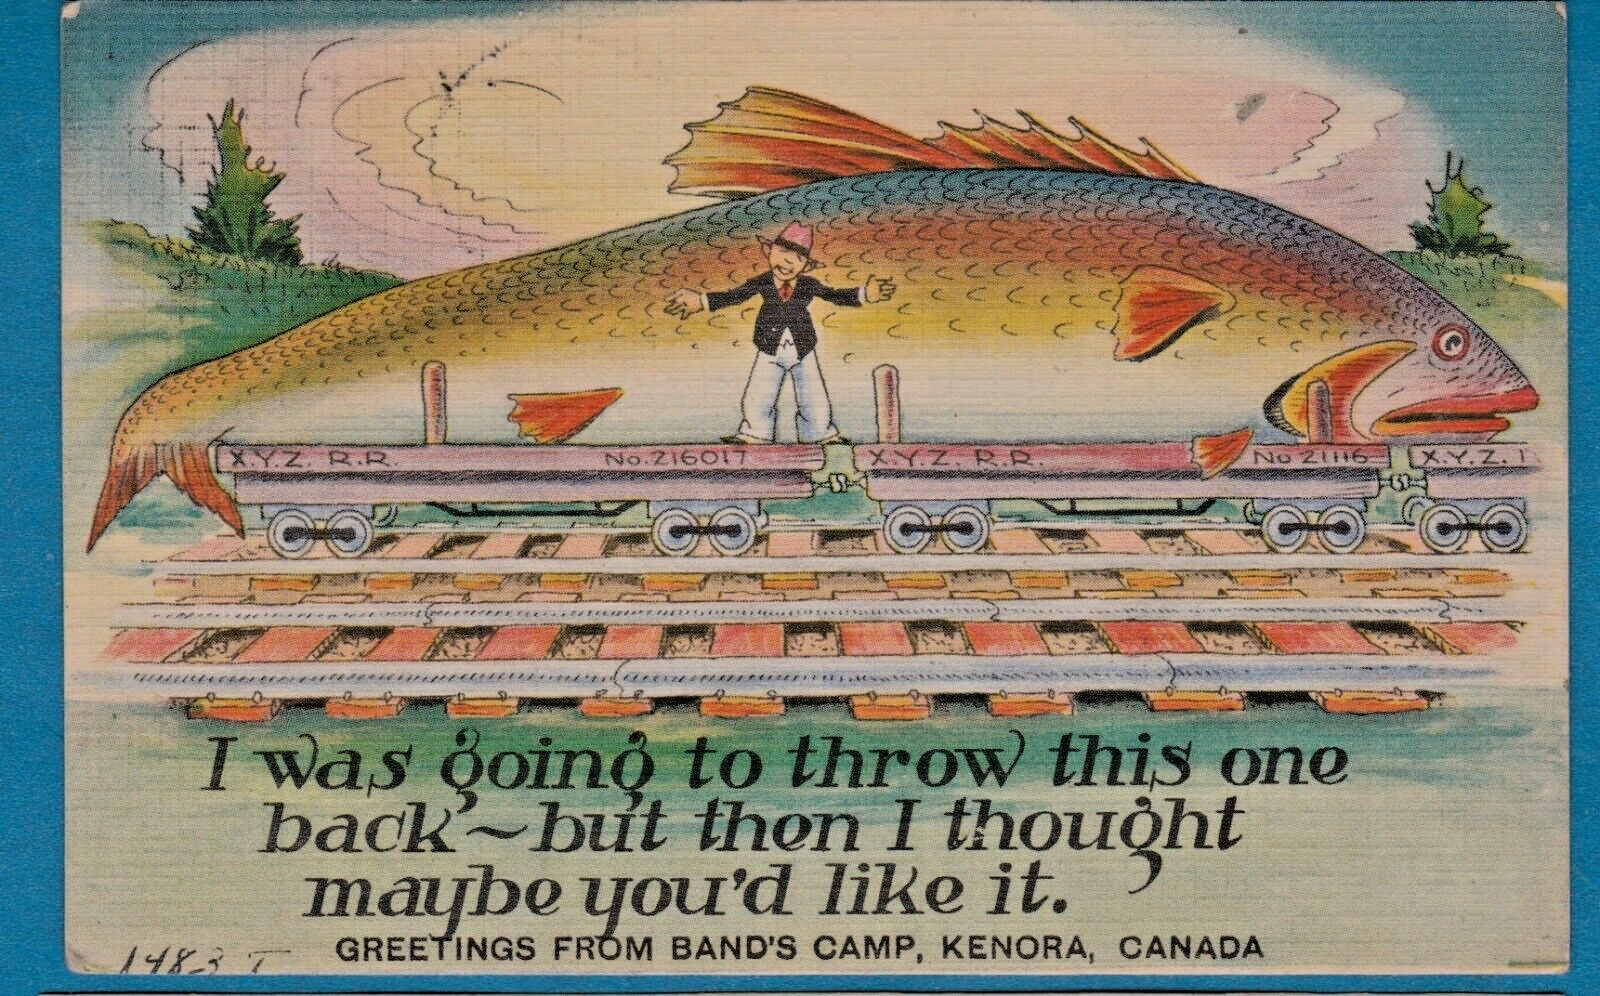 Exaggerated postcard/HUGE fish on train car/greeting Band's Camp, Kenora, Canada